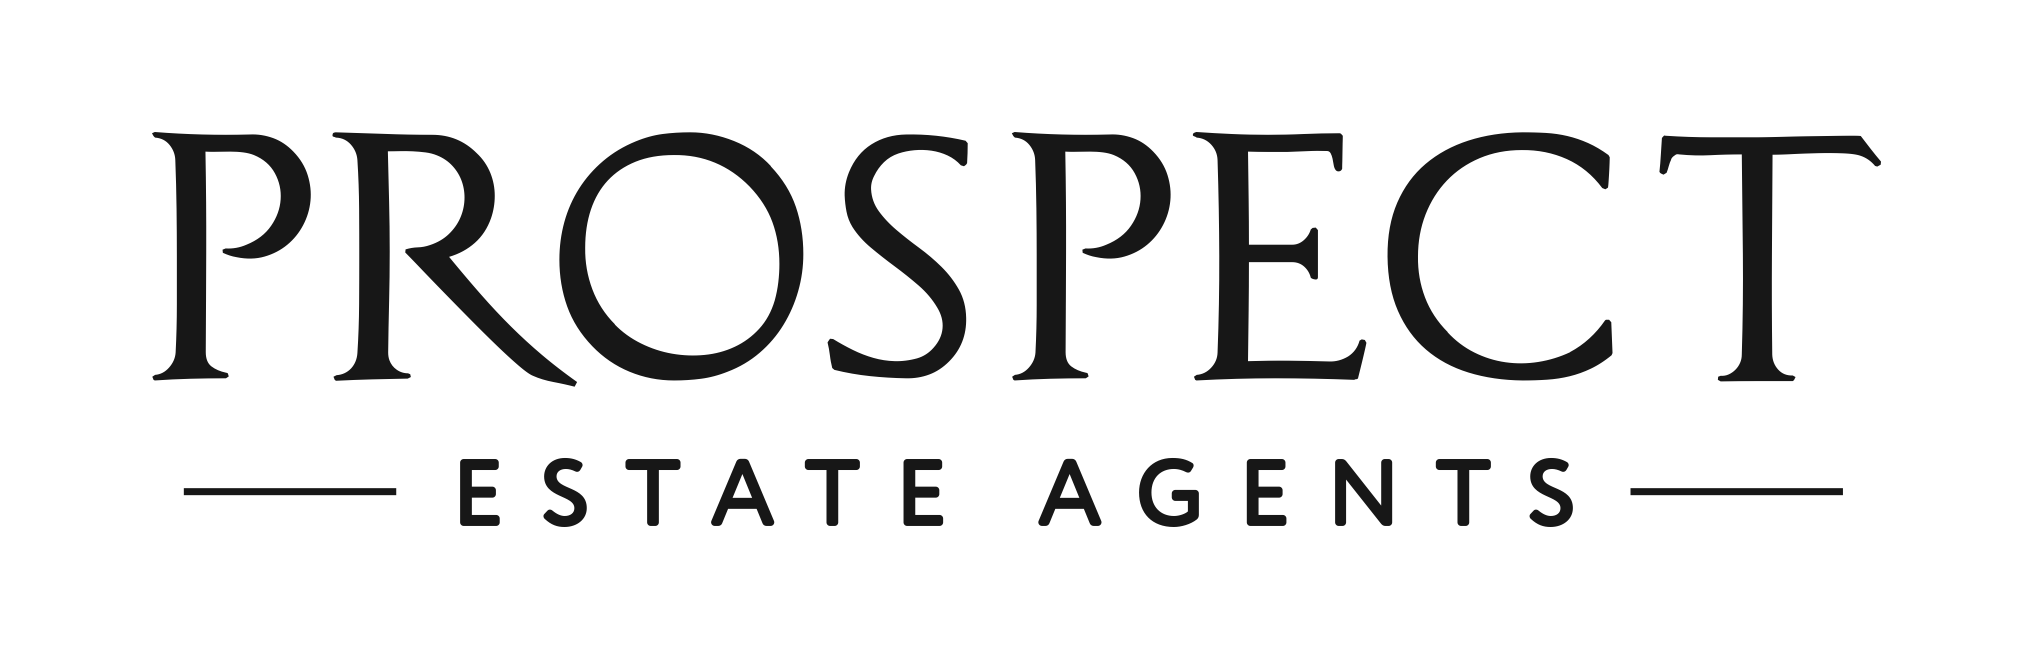 Prospect Estate Agents - ABBOTSFORD